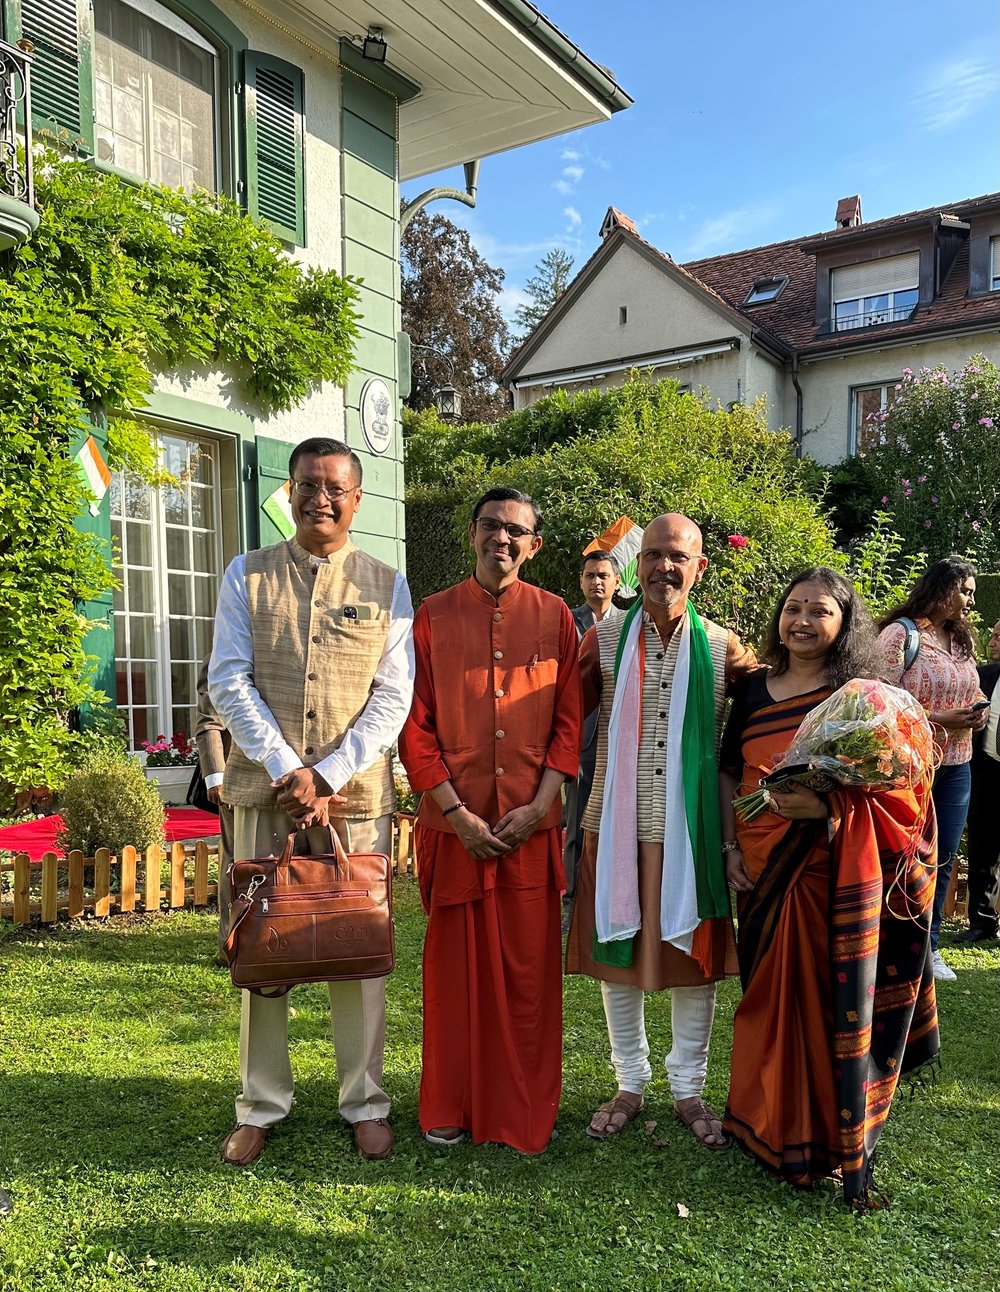 Shachi Gurumayum, Swami Shubamritananda, Seine Exzellenz Mridul Kumar, Rahmati K. Mishra   Social Secretary to the Ambassador